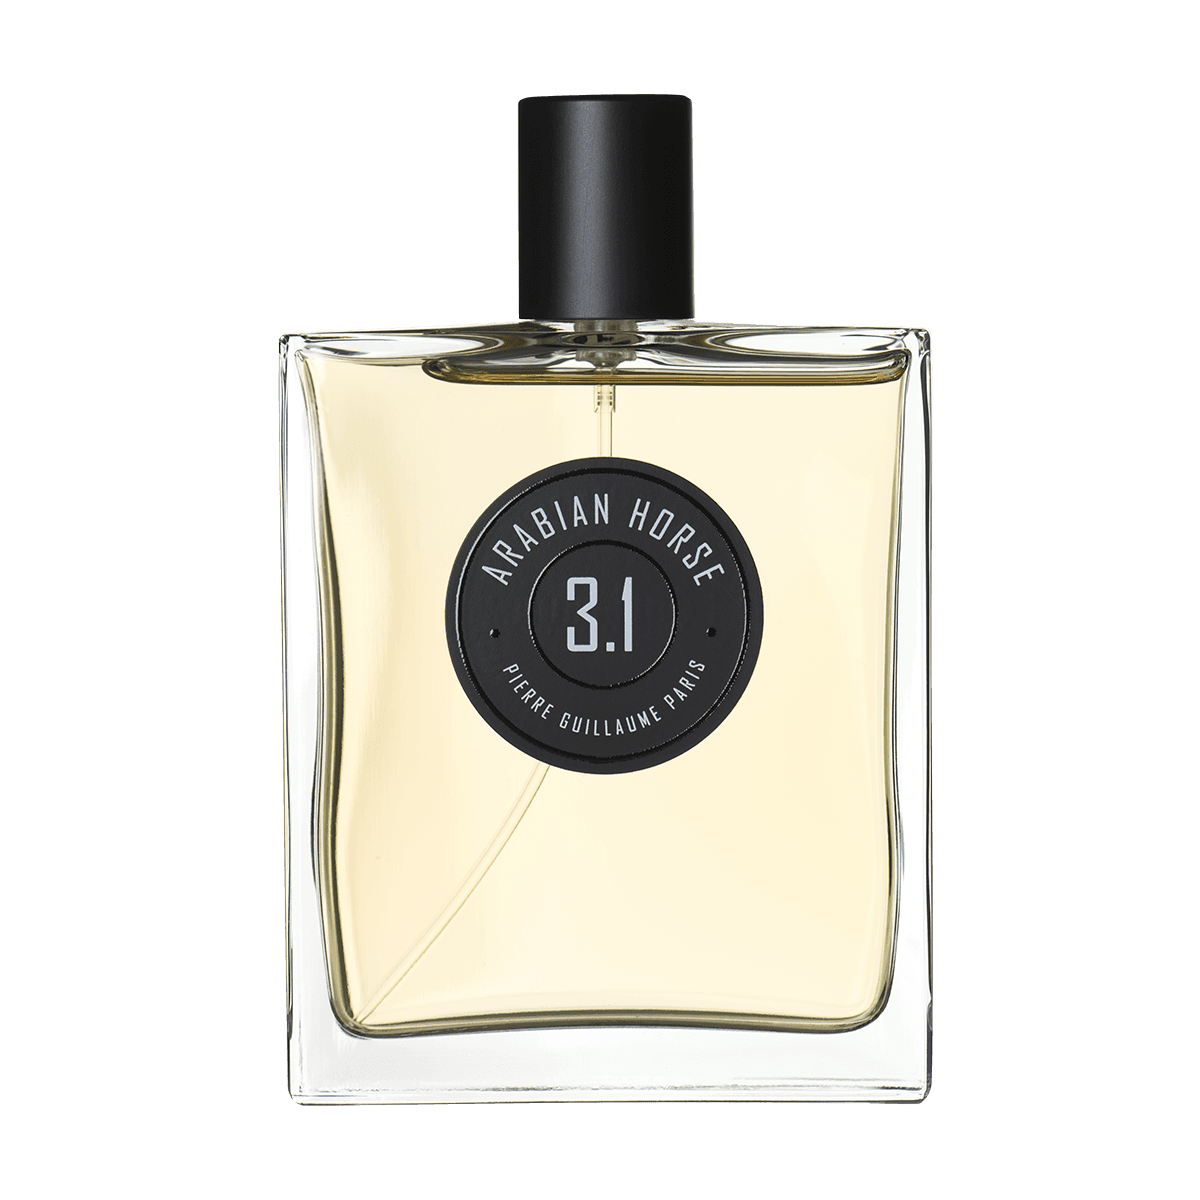 Pierre Guillaume Paris - 3.1 Arabian Horse 100 ml | Perfume Lounge